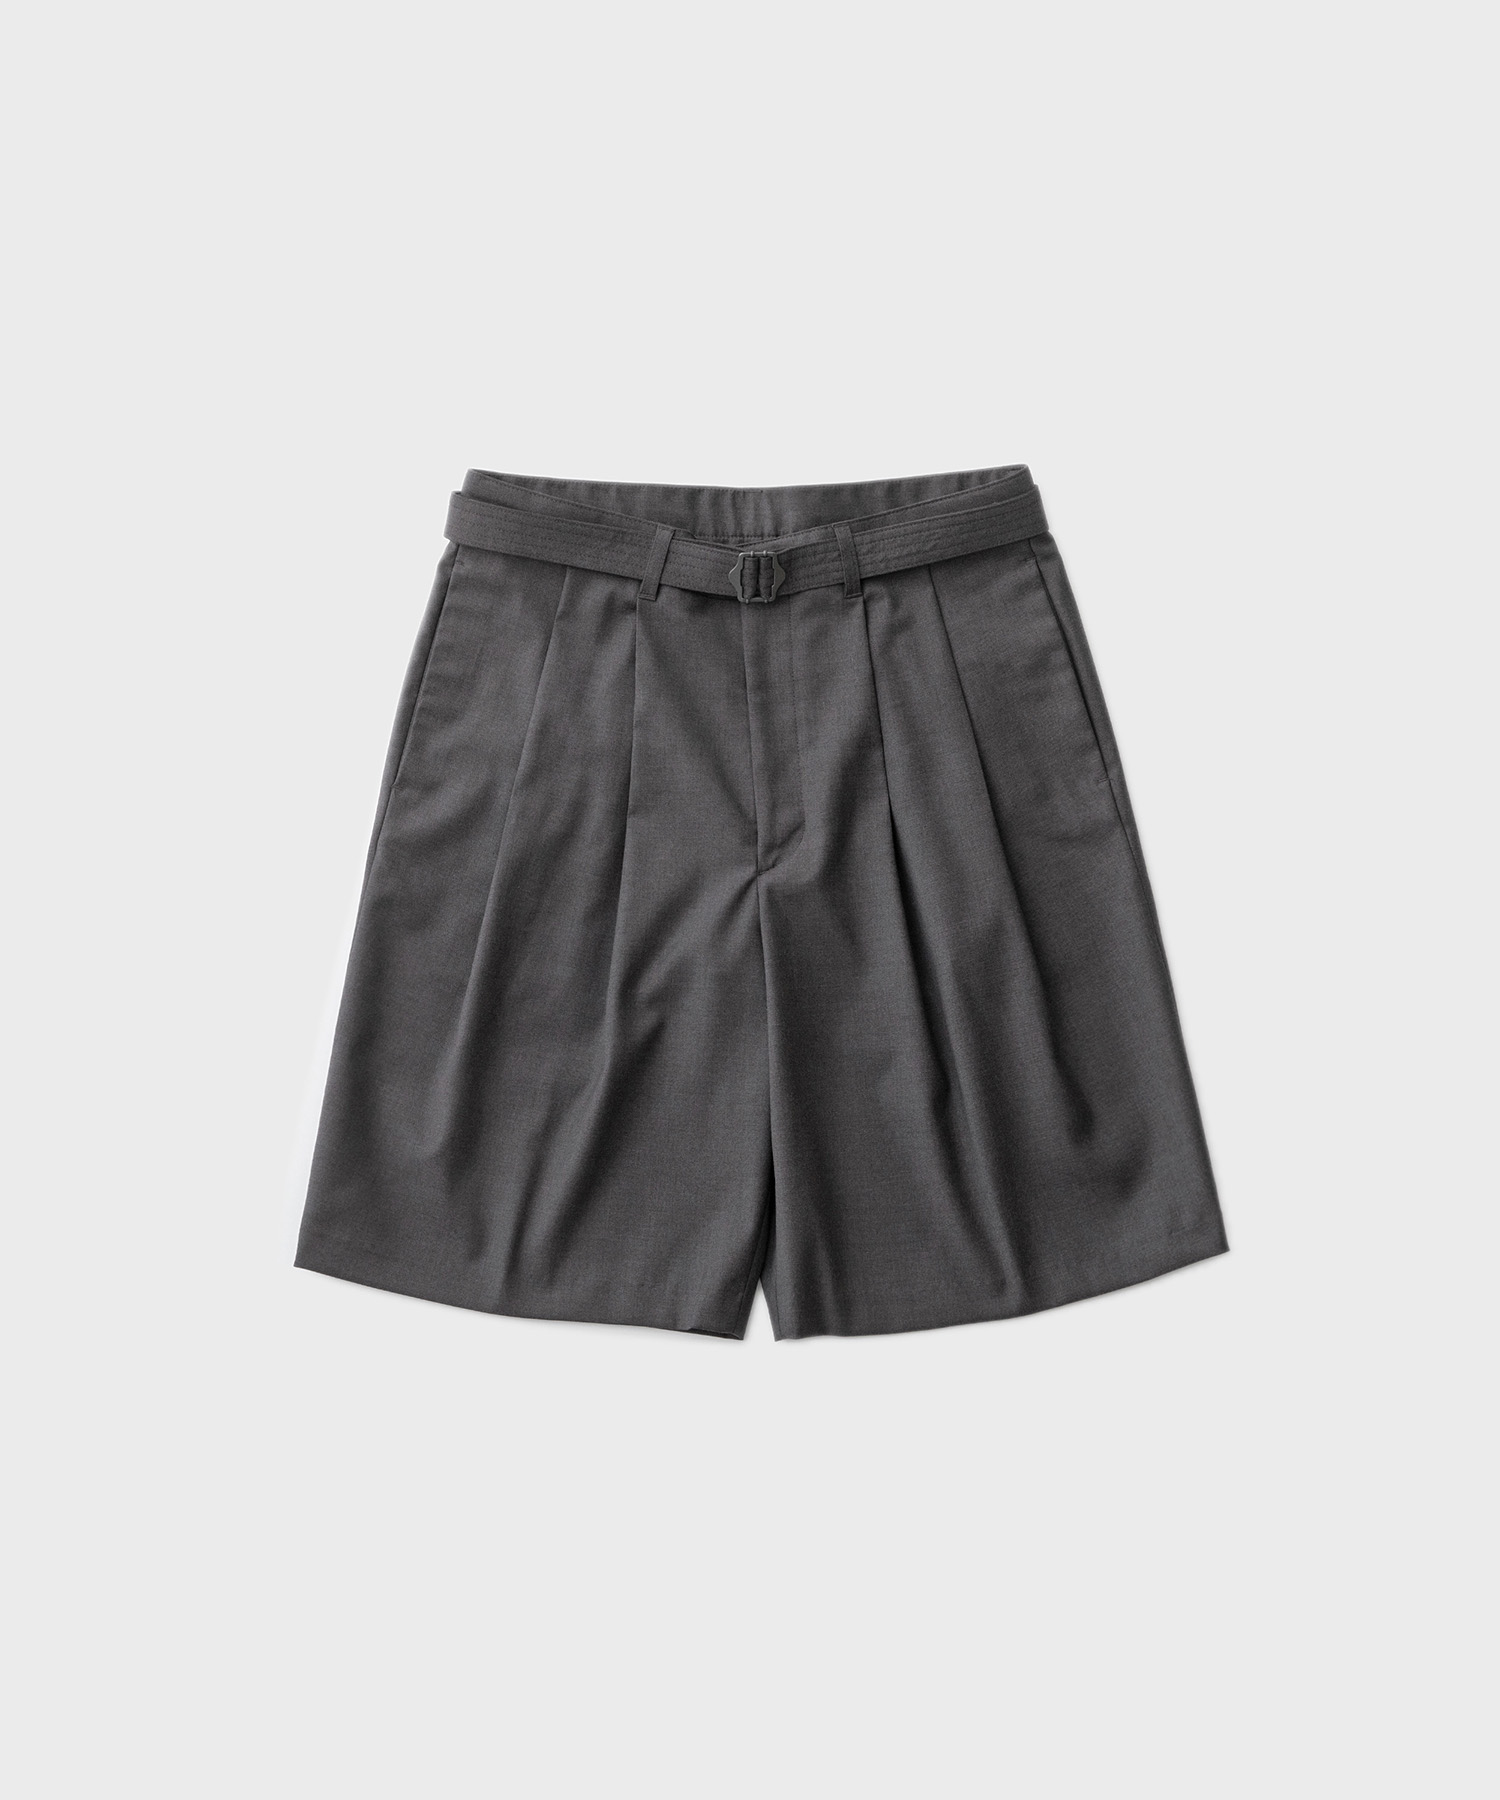 Hemingway Belted Shorts (Heather Gray)